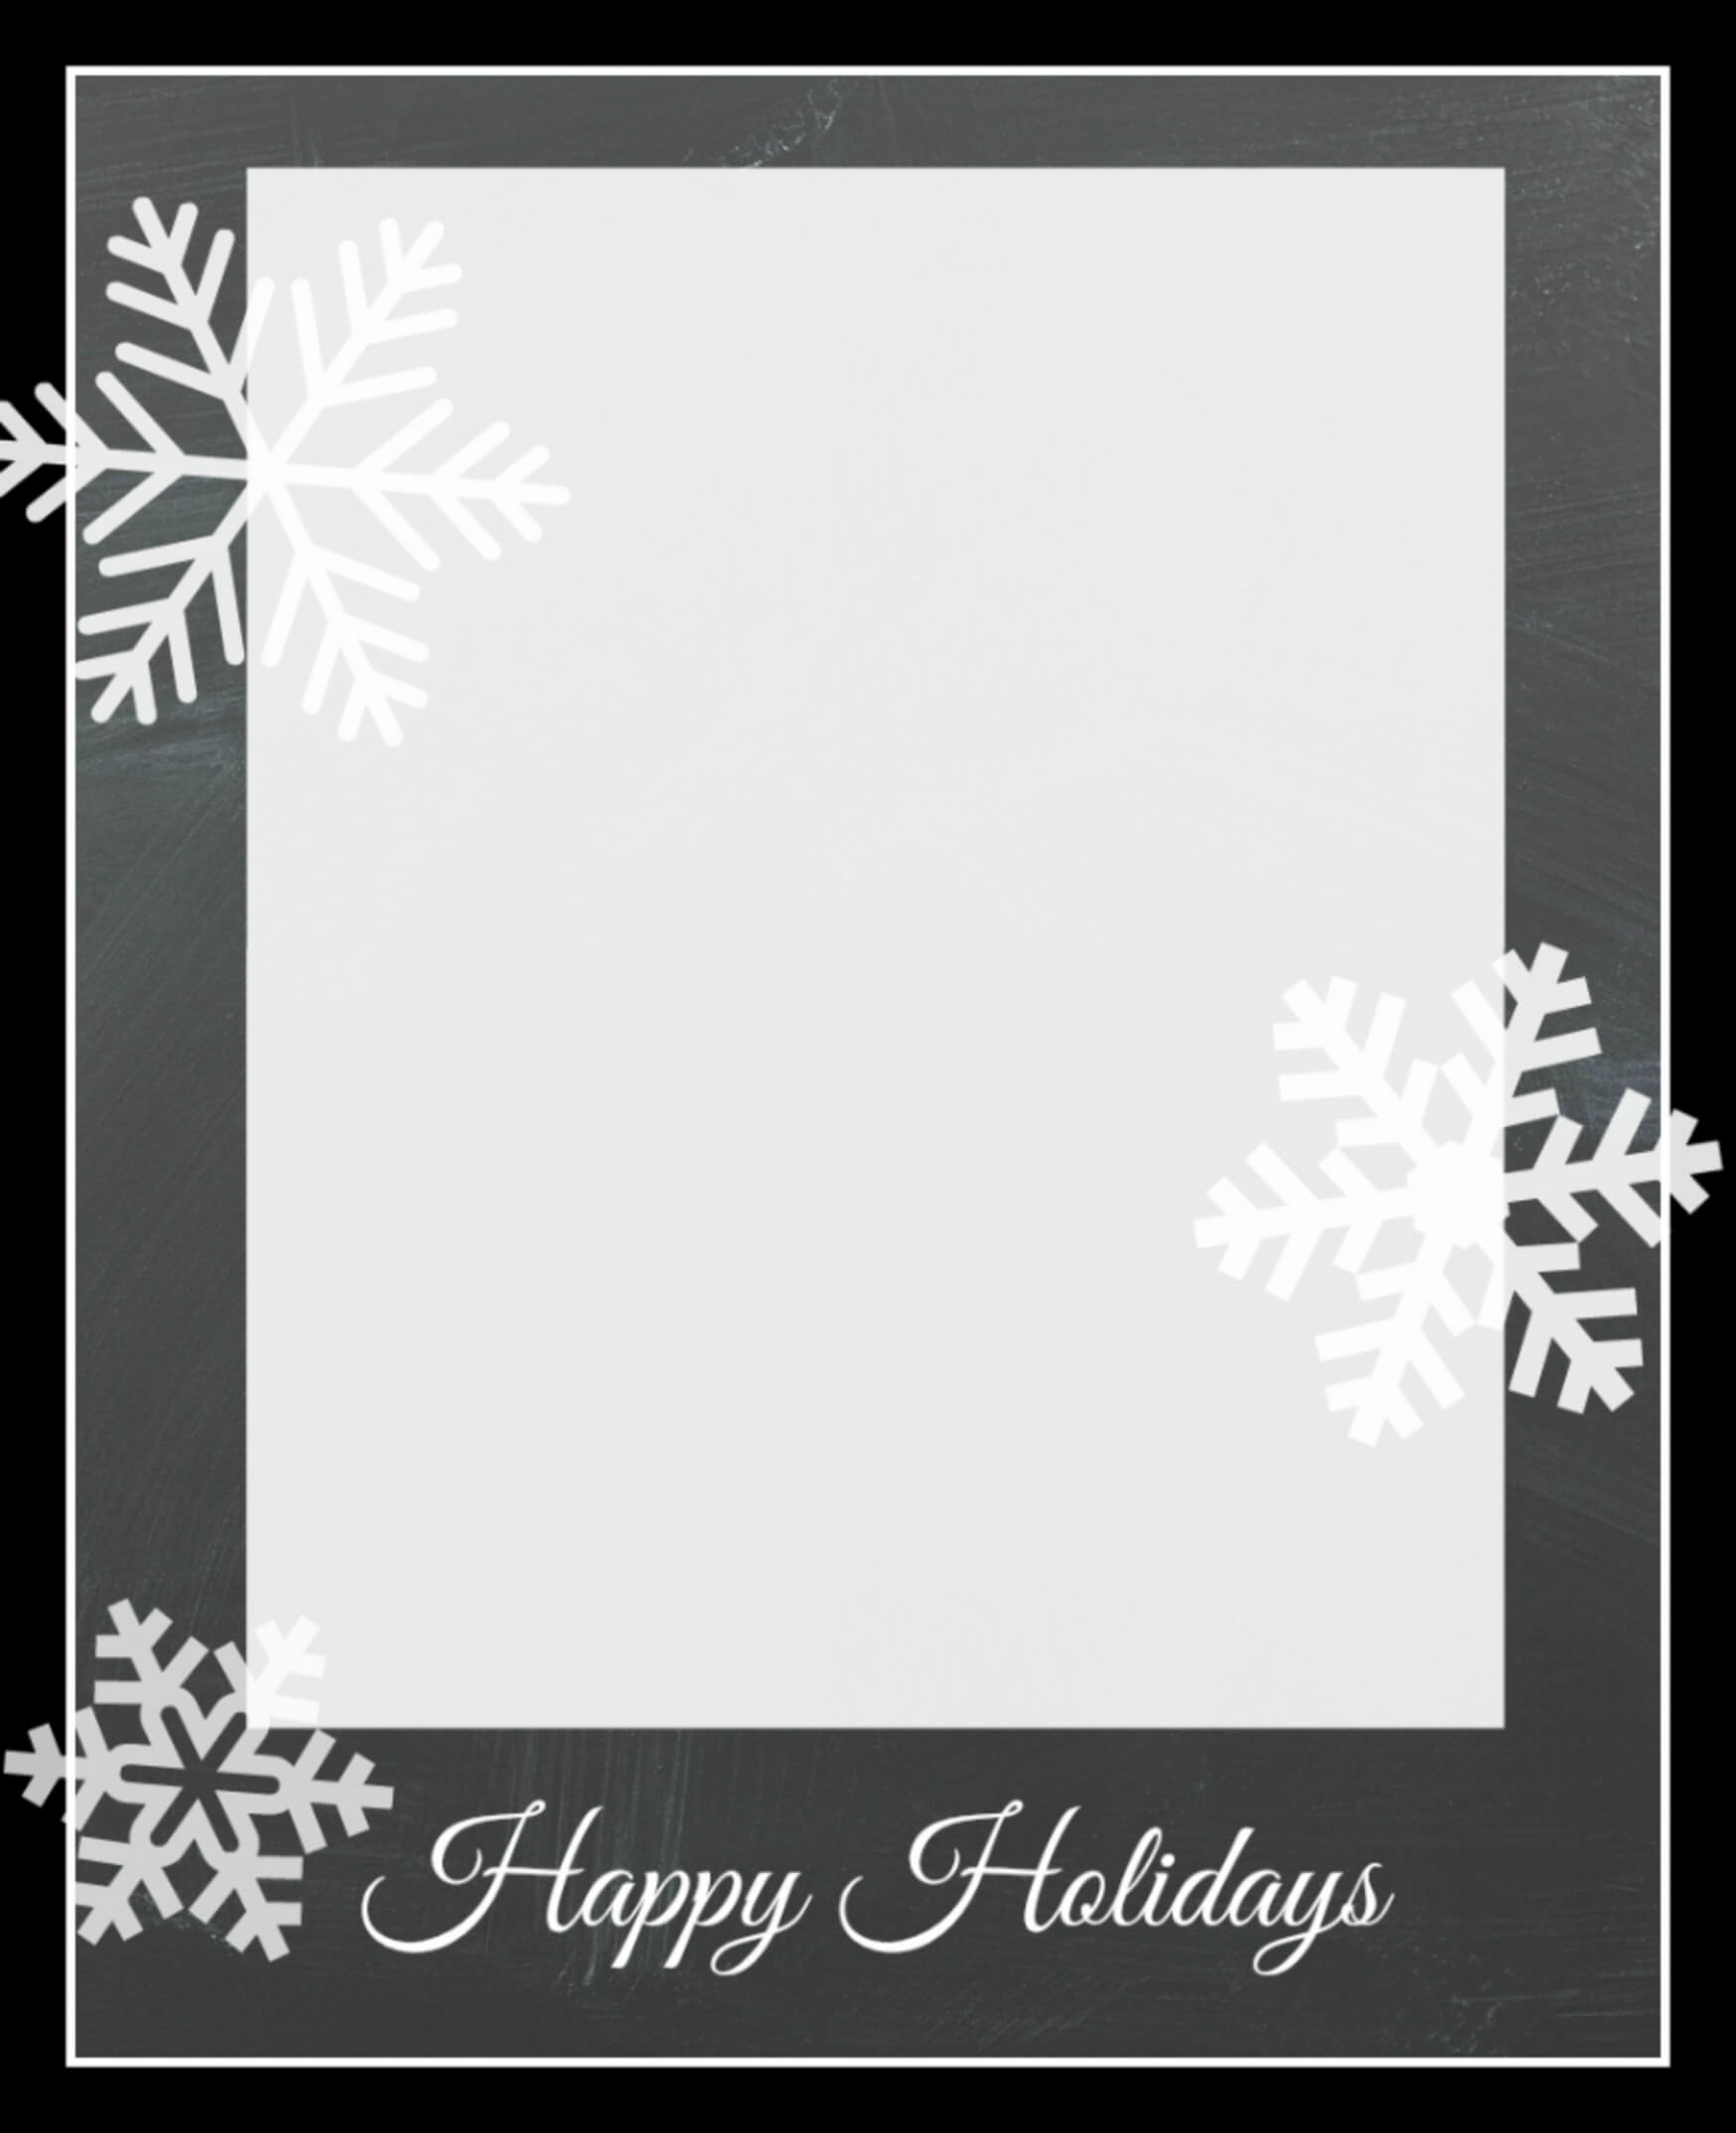 002 Snowflakecard3 Holiday Card Templates Free Template Throughout Free Holiday Photo Card Templates